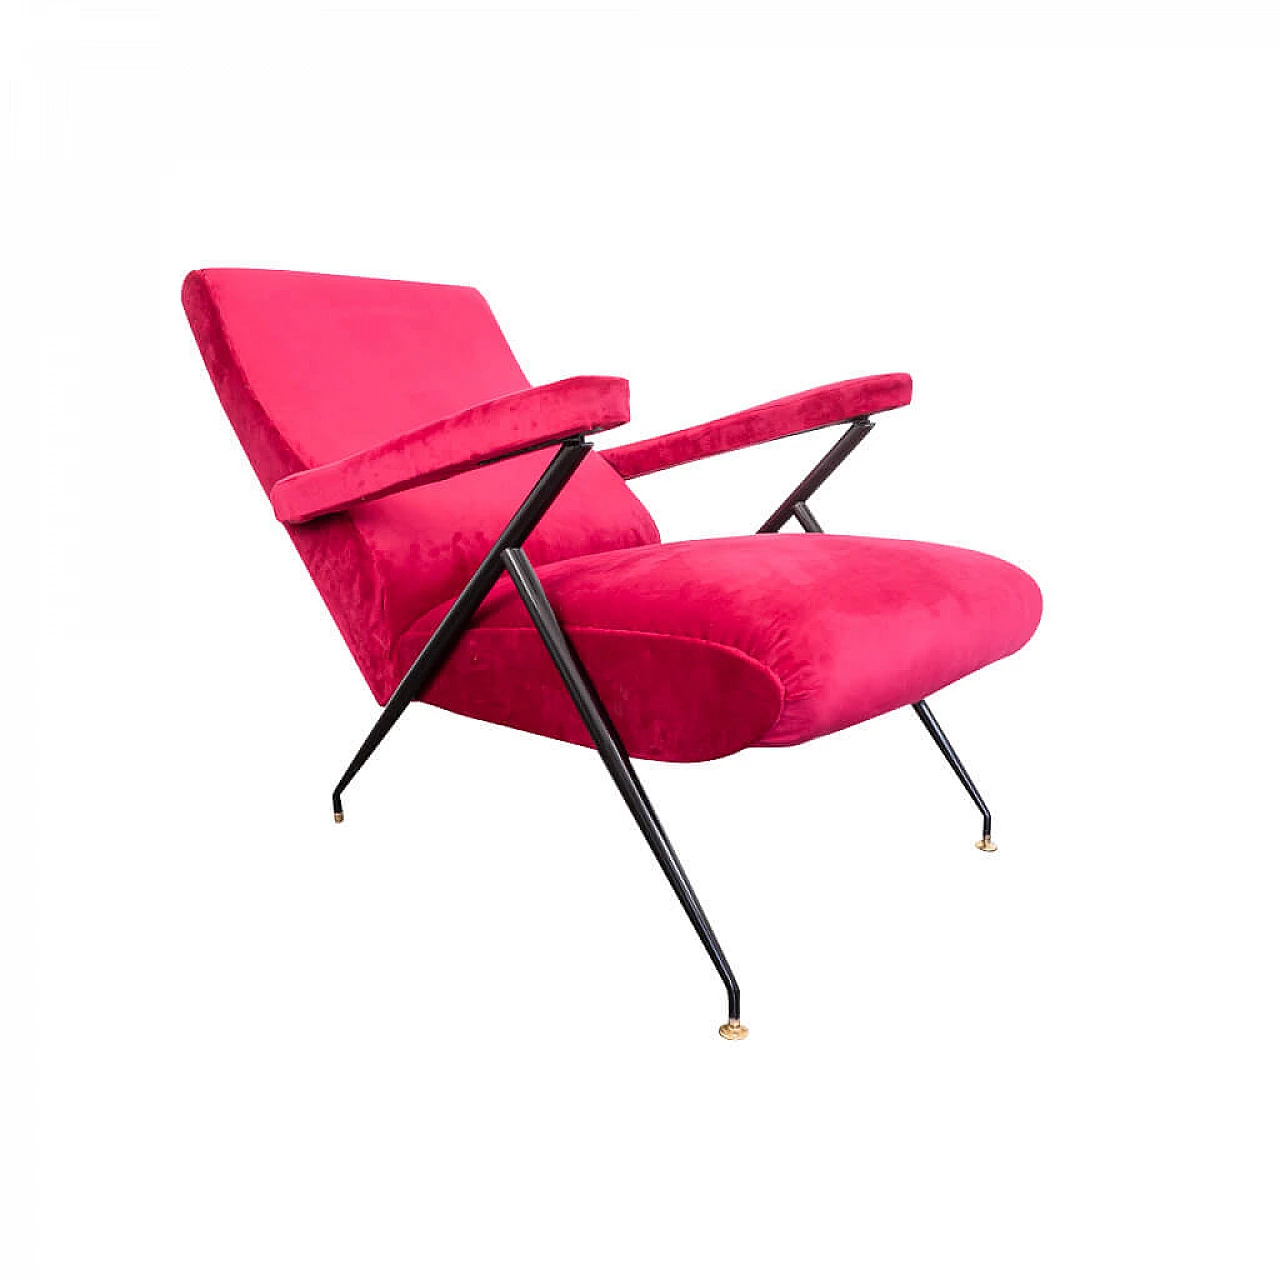 Recliner armchair in red velvet, 1950s 1225063